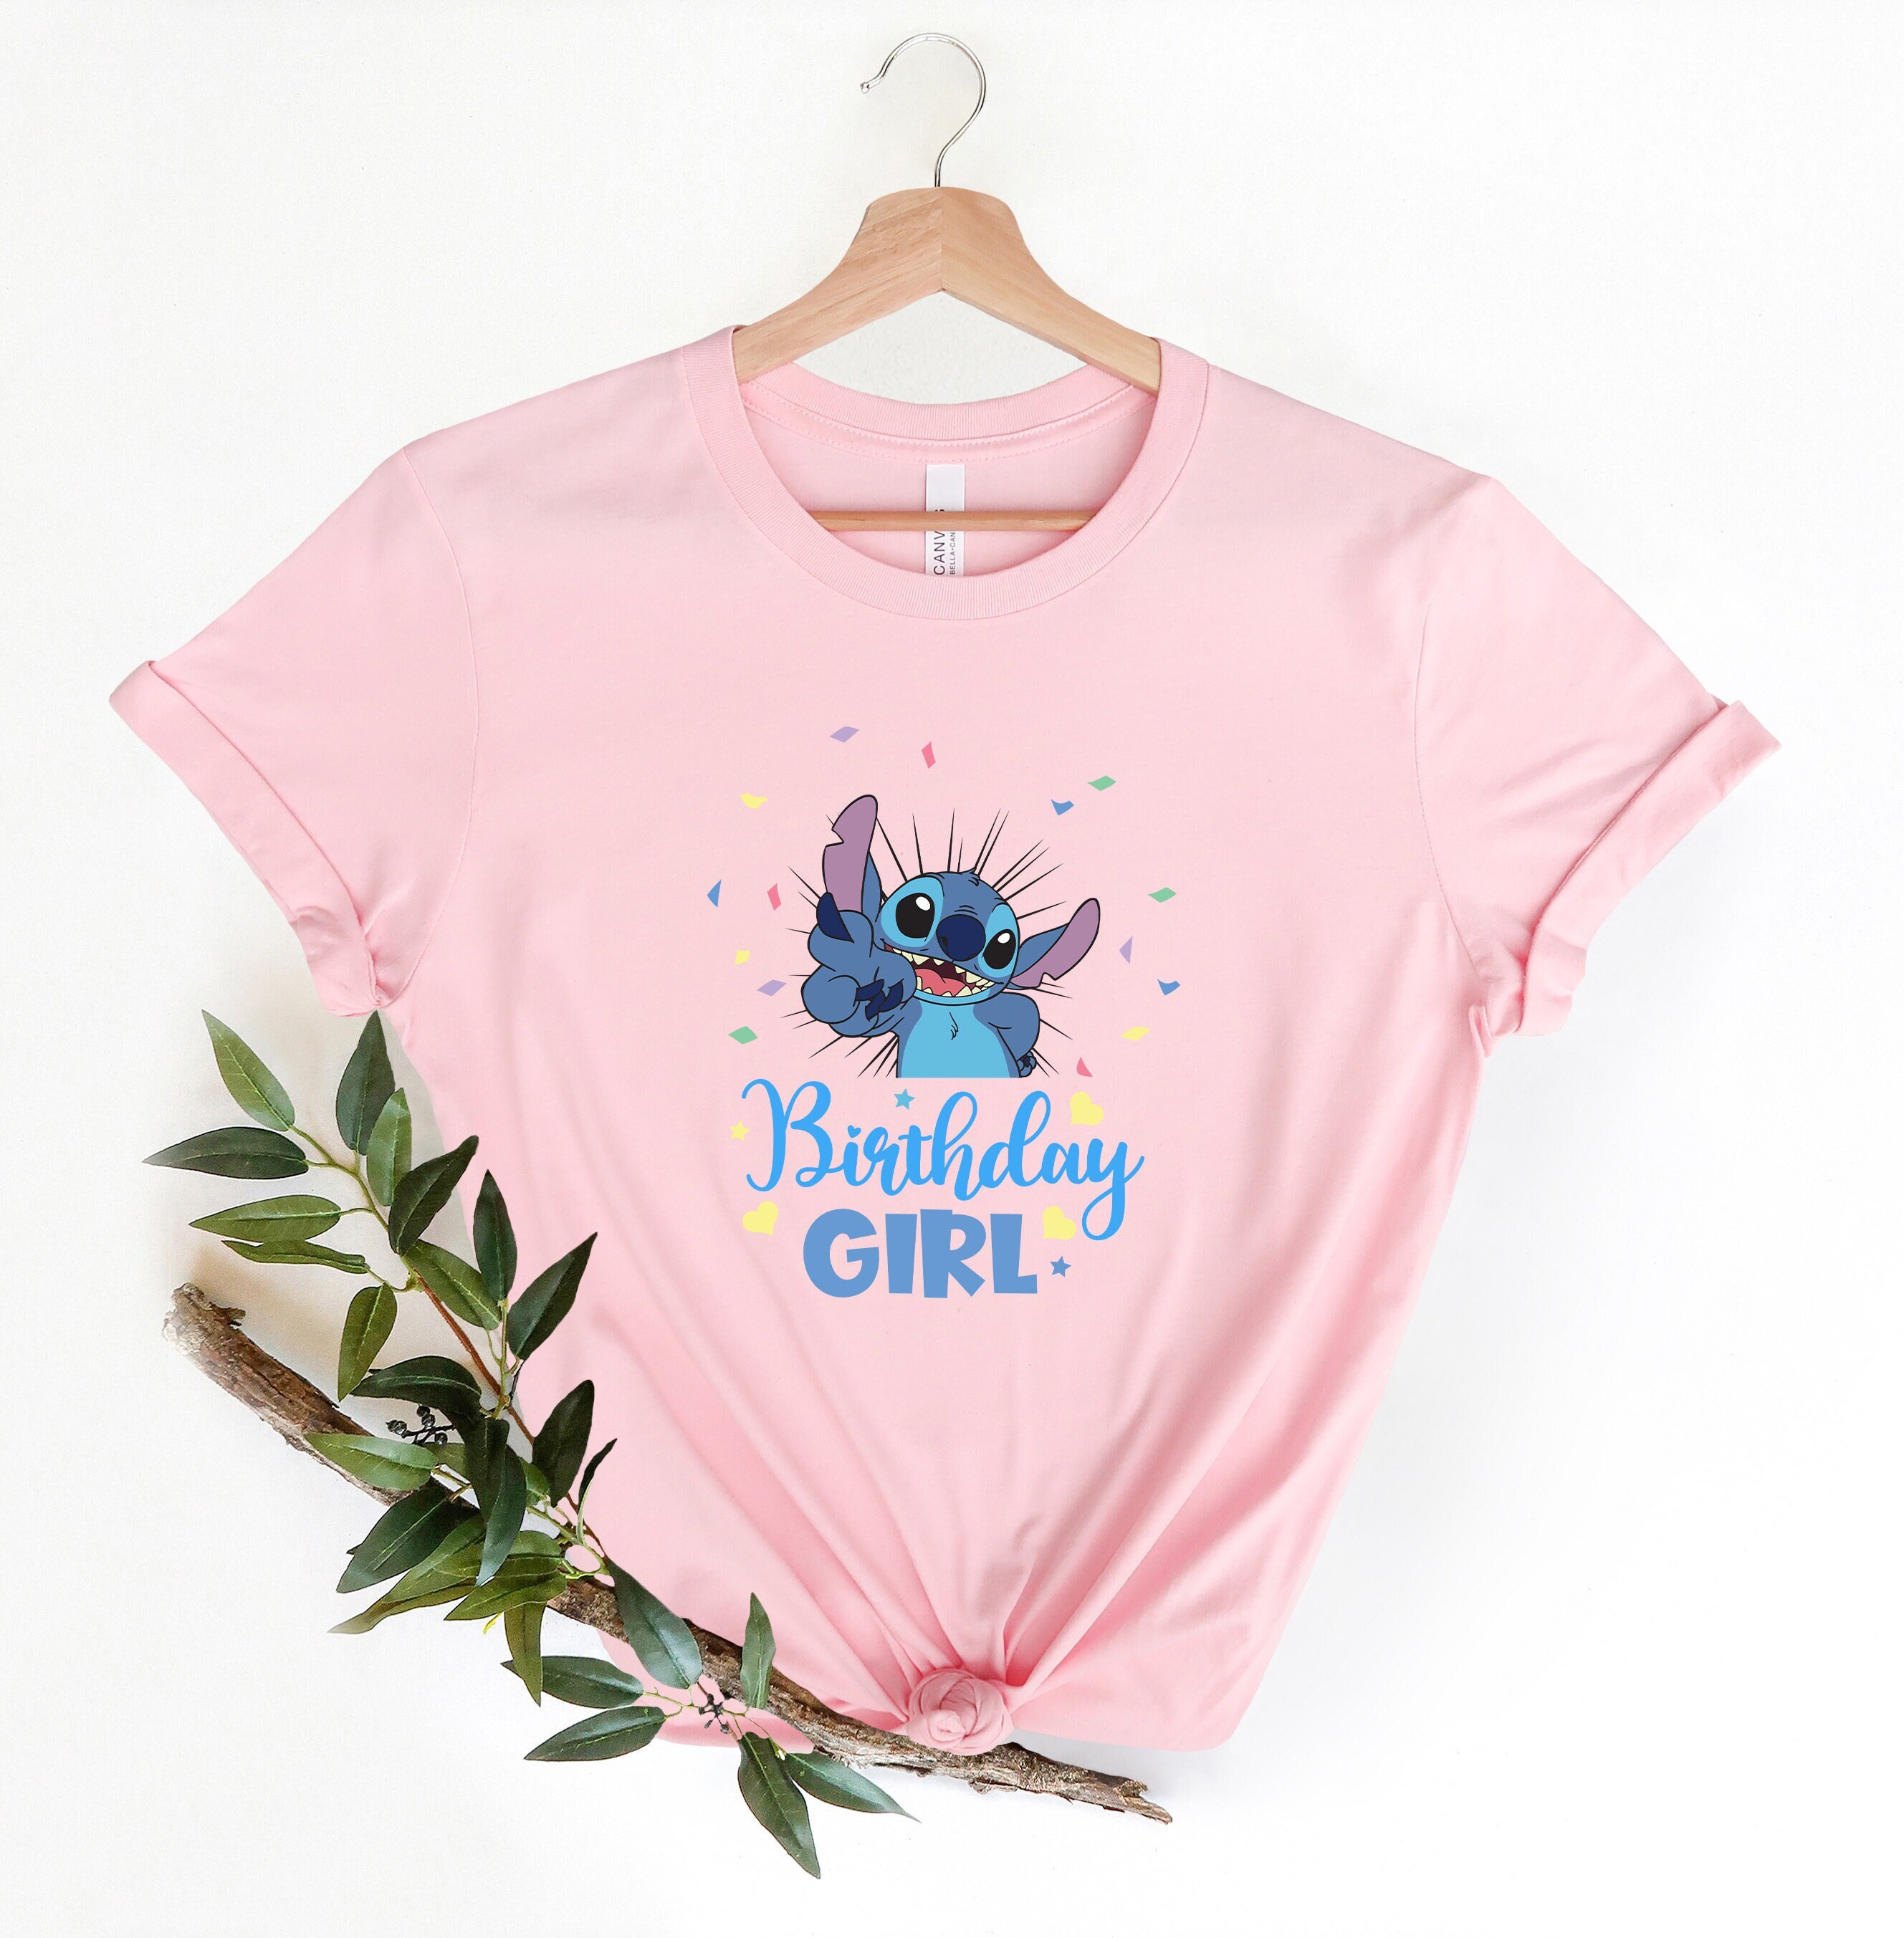 God Say That I Am Disney Stitch T-shirt, Stitch Mode T-shirt, Stitch  Emotion, Disney Fan Fashion, Stitch Merchandise, Family Trip T-shirt 